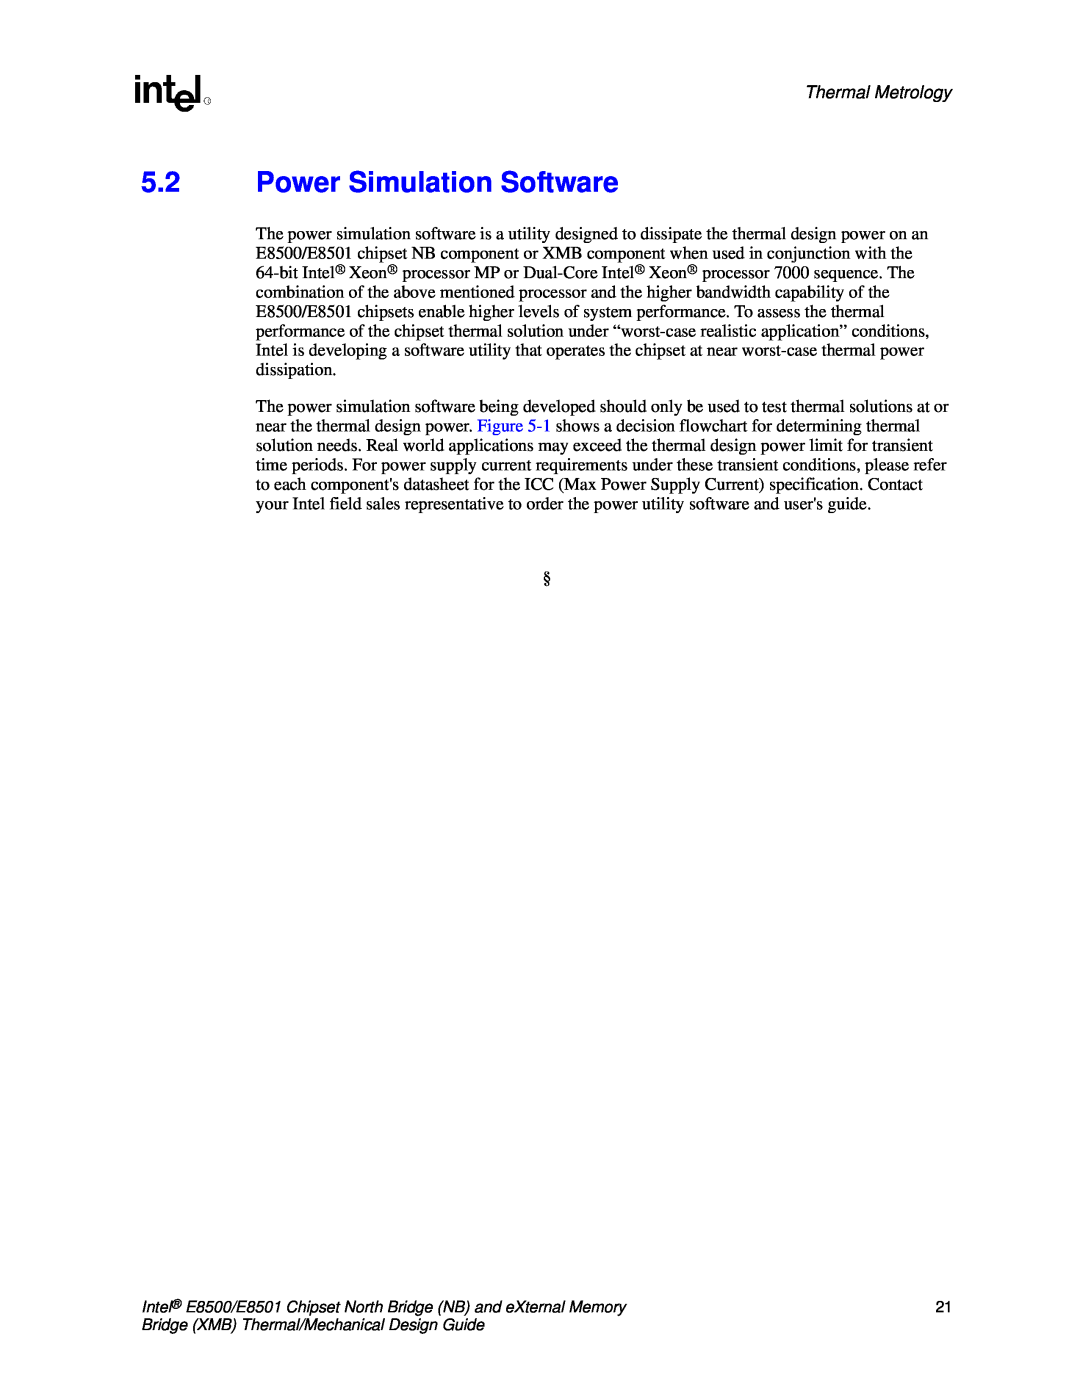 Intel E8501 manual 5.2Power Simulation Software, Thermal Metrology 